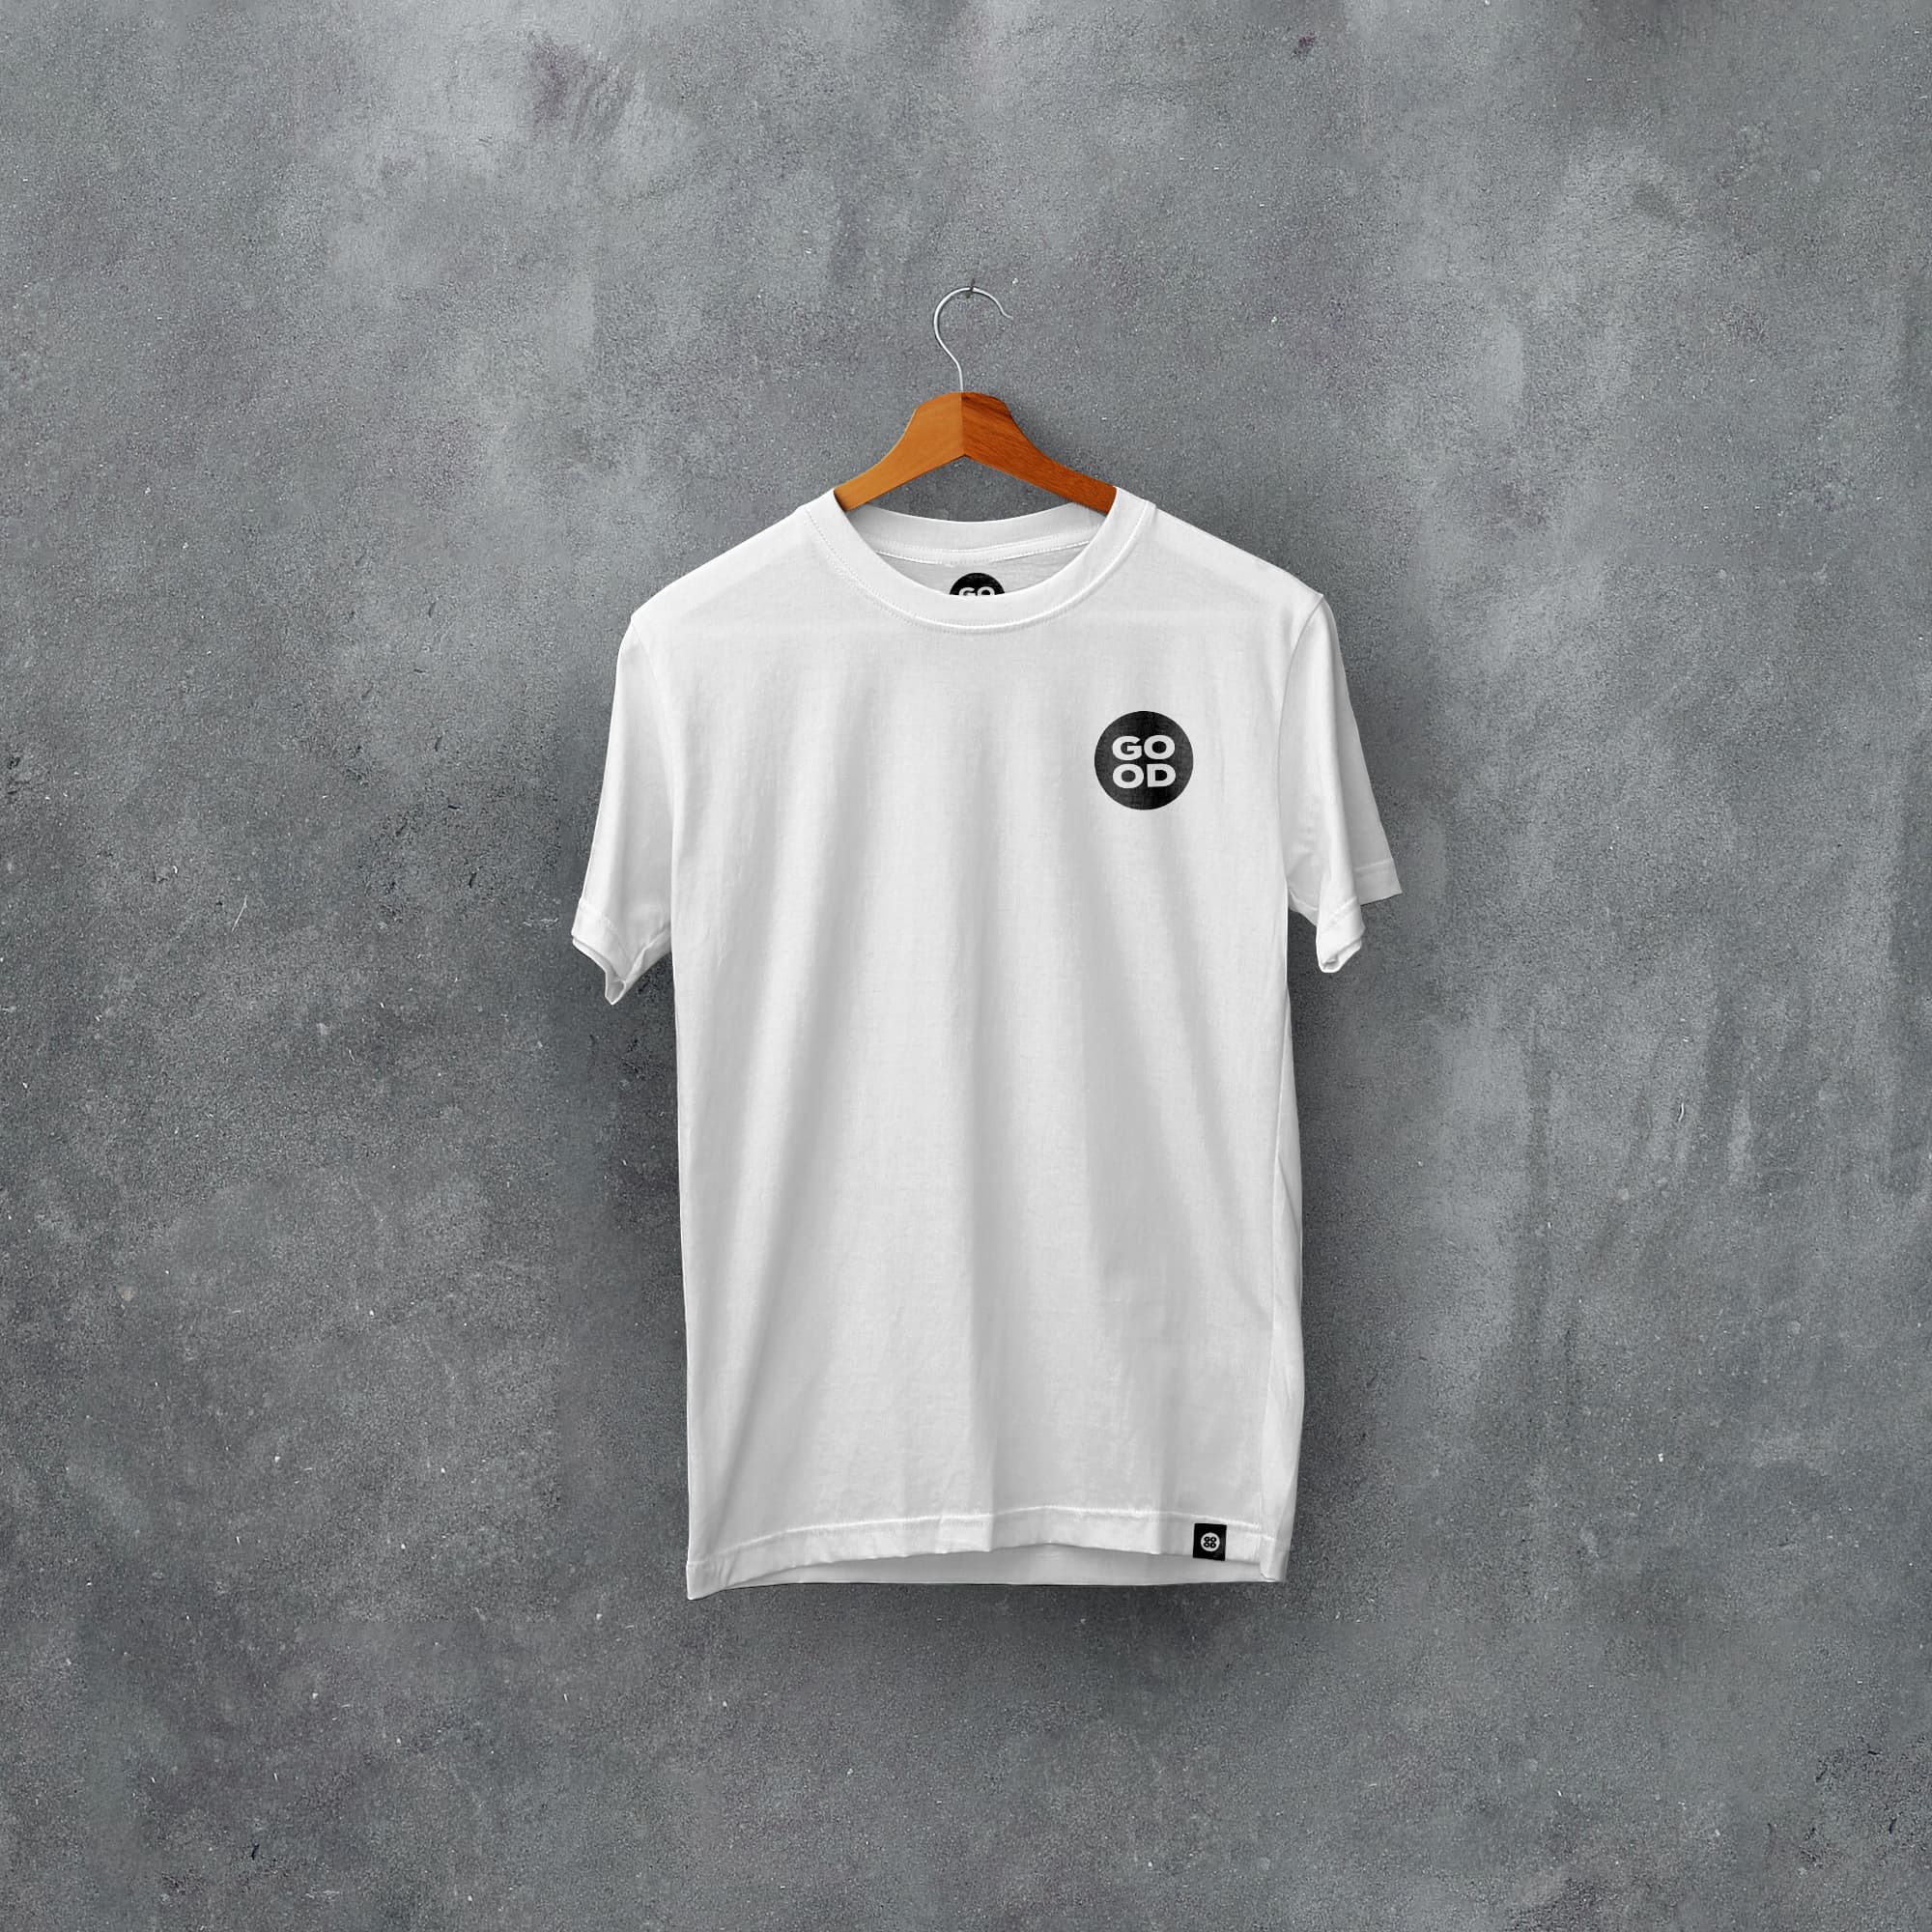 Rochdale Classic Kits Football T-Shirt